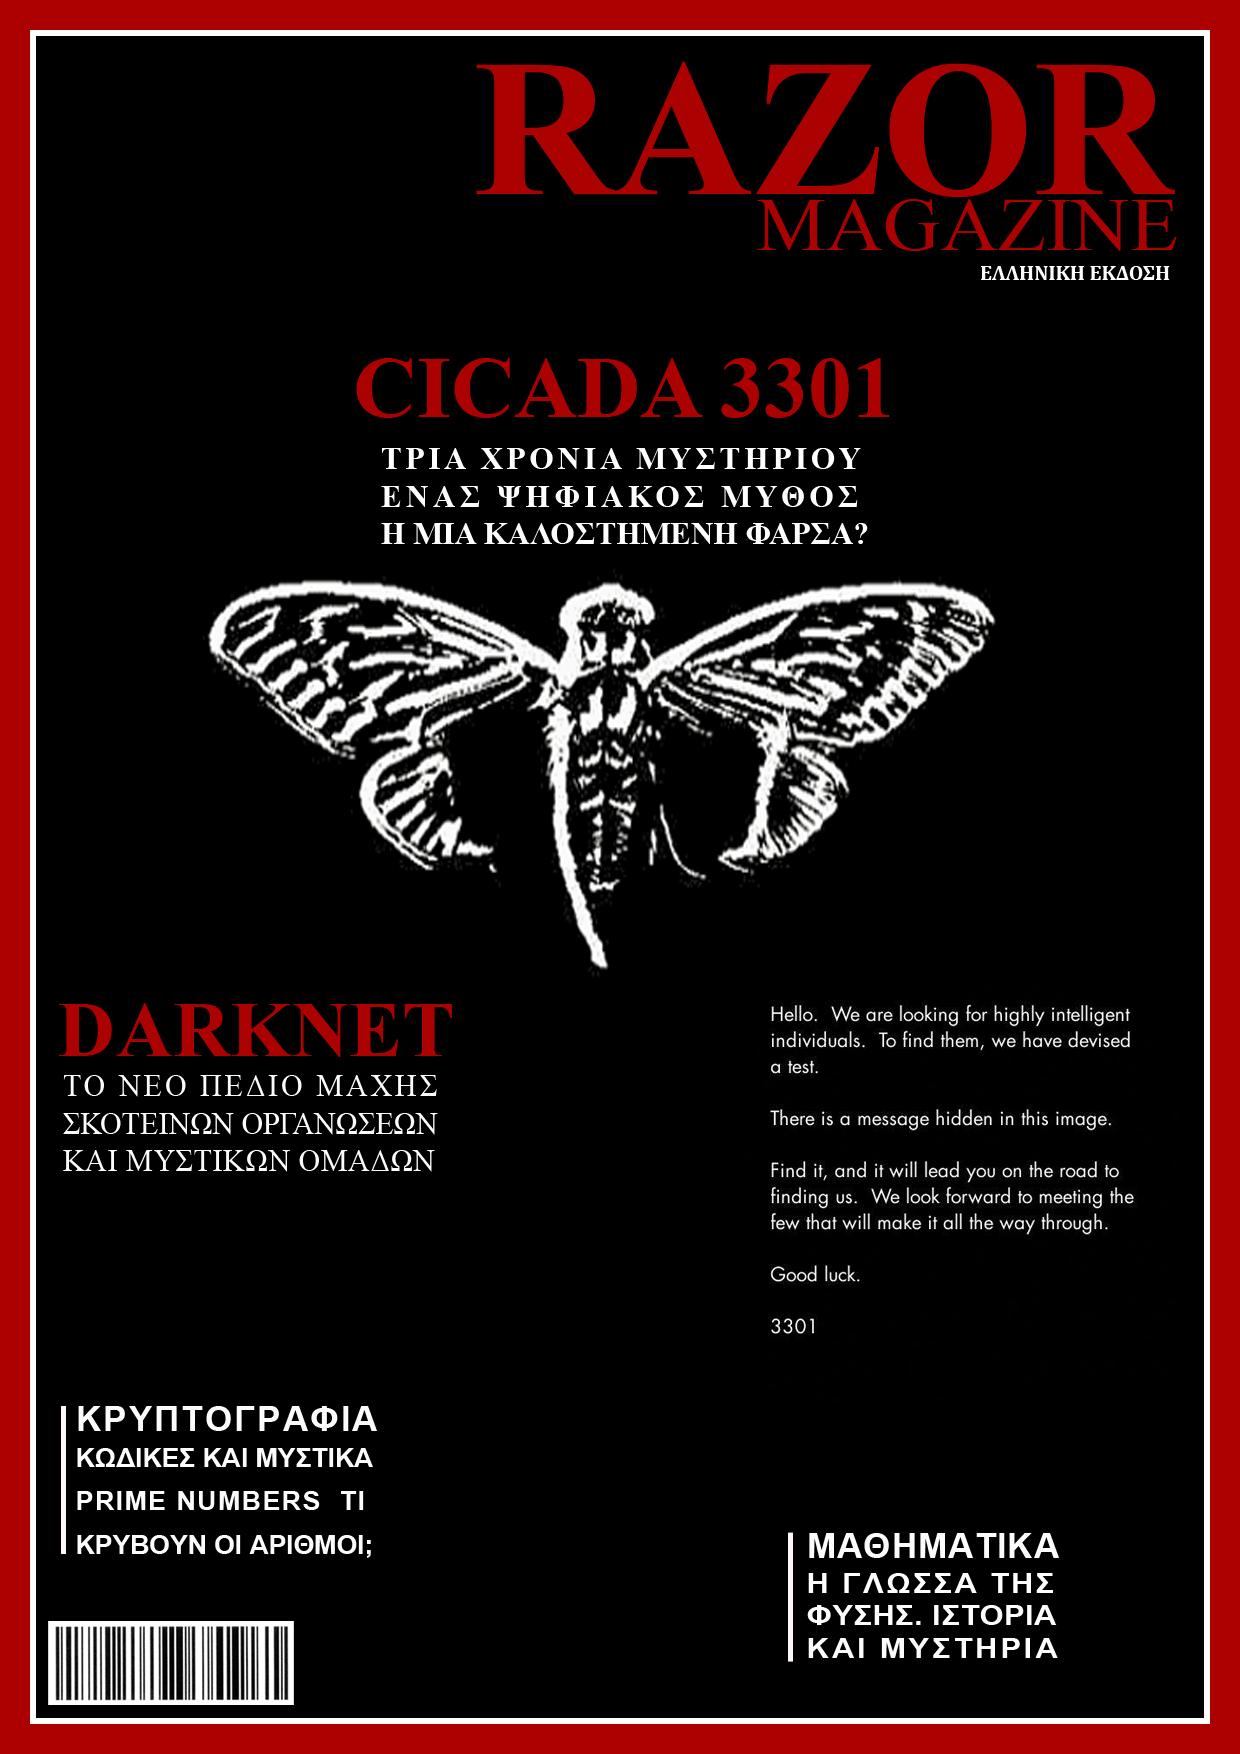 Cicada 3301 ideas. cicada, german universities, cryptography